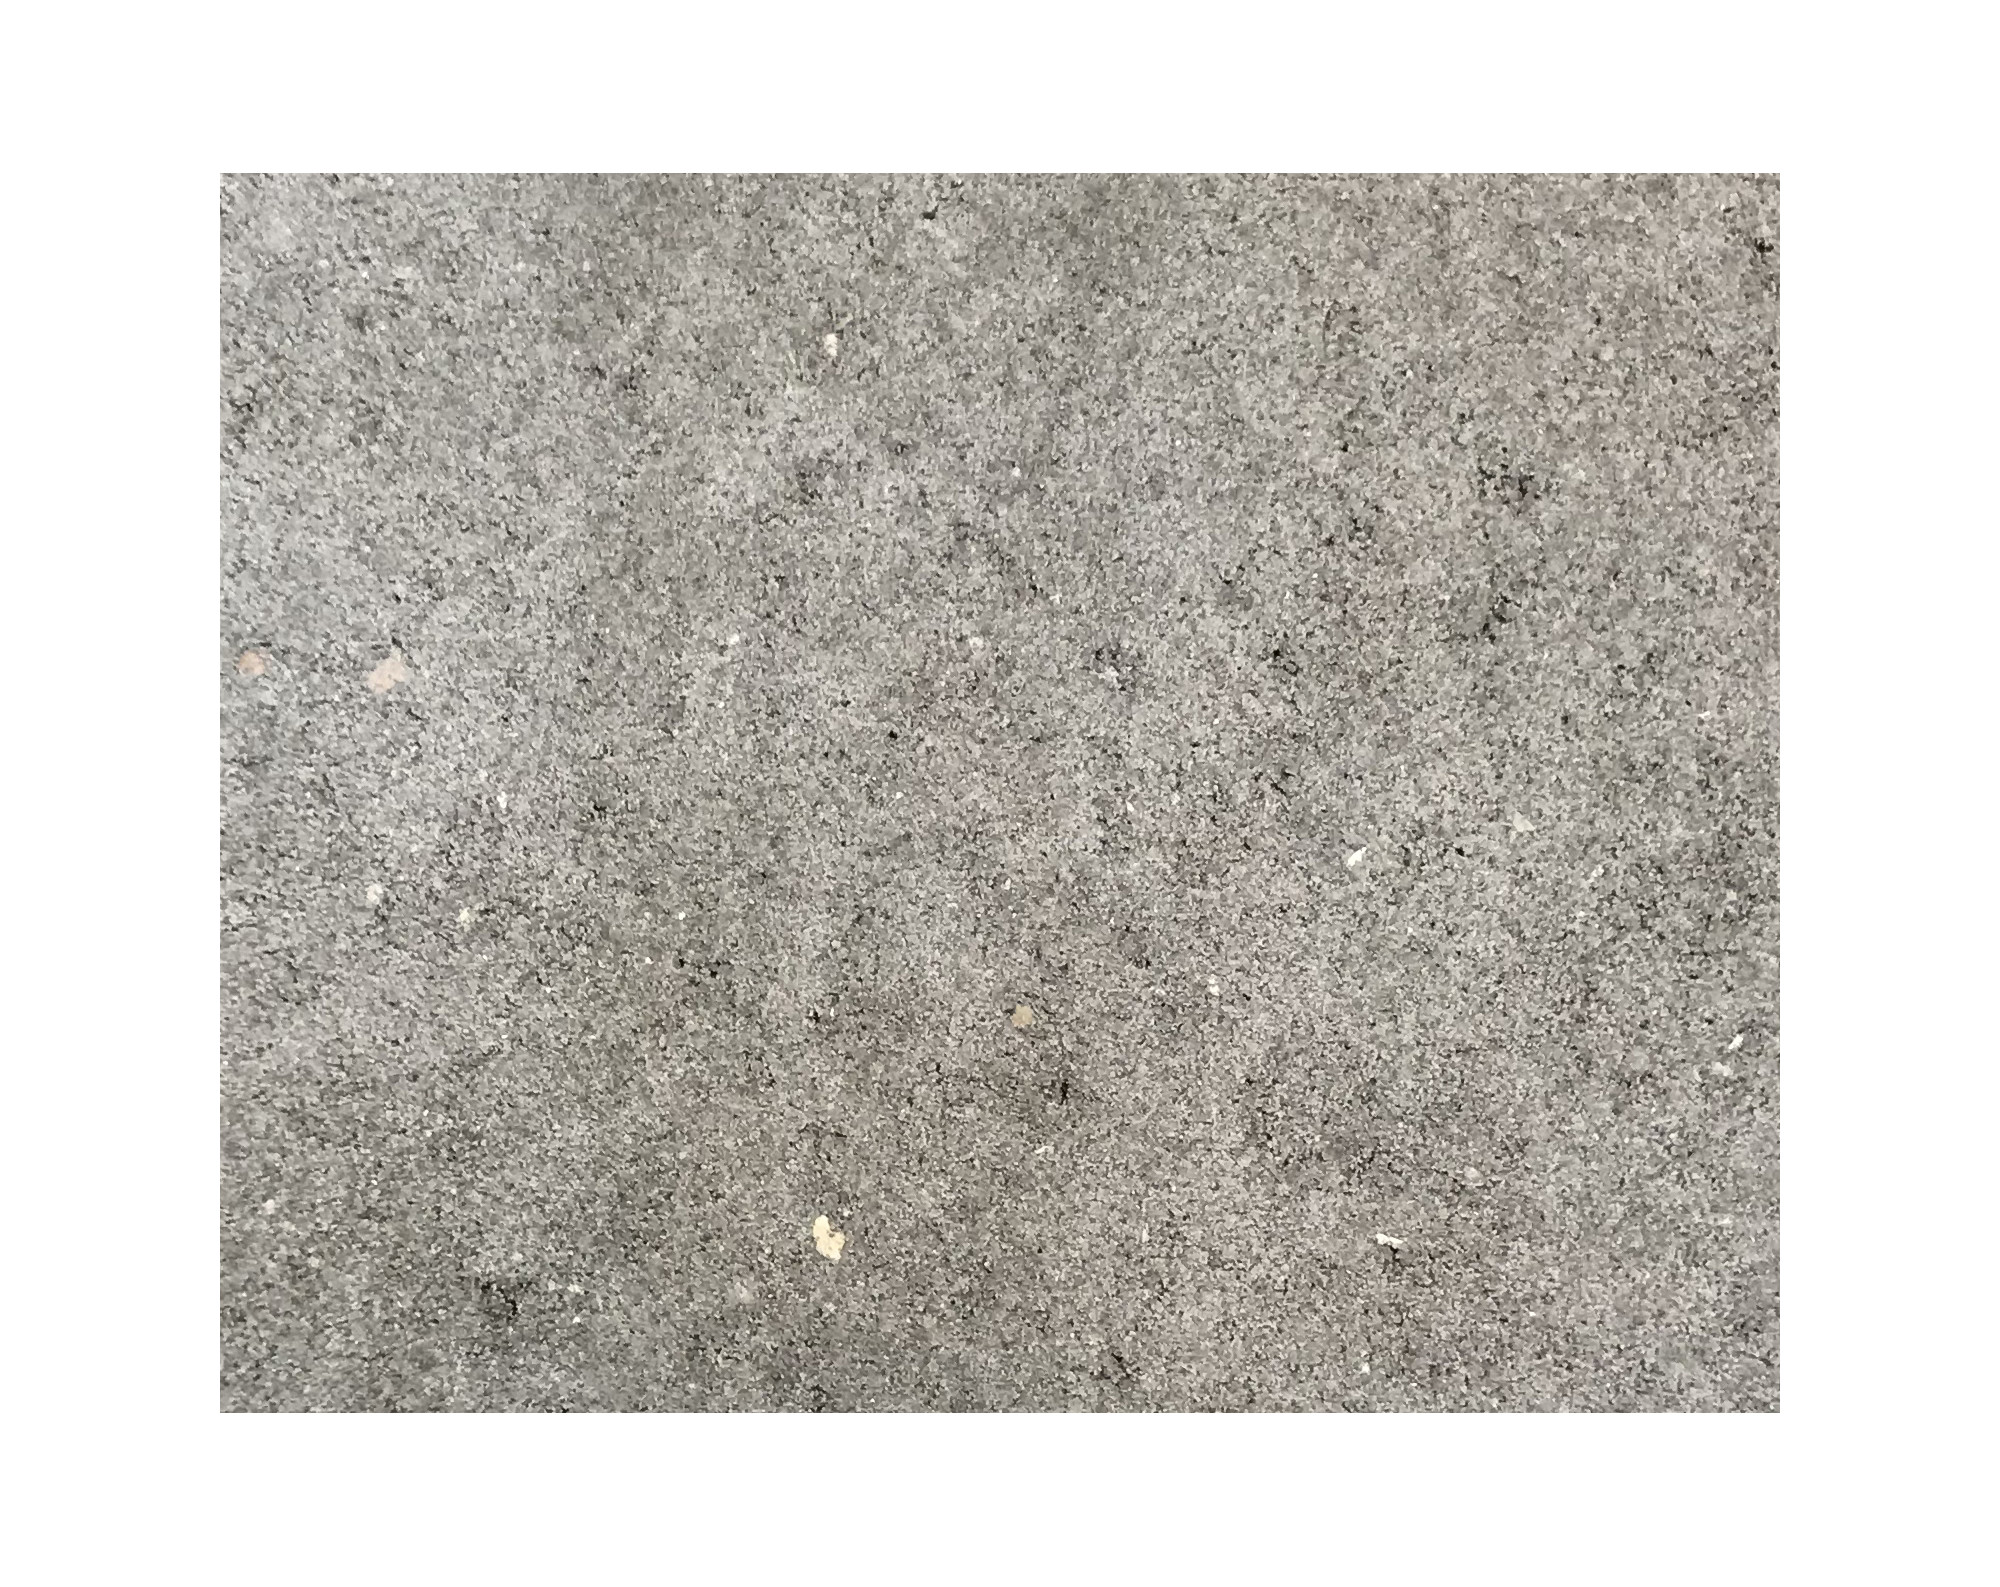 Harmo roc nevadaset, rustica-serie, 8-vormig d:5,00mx7,70m, grijs, beton